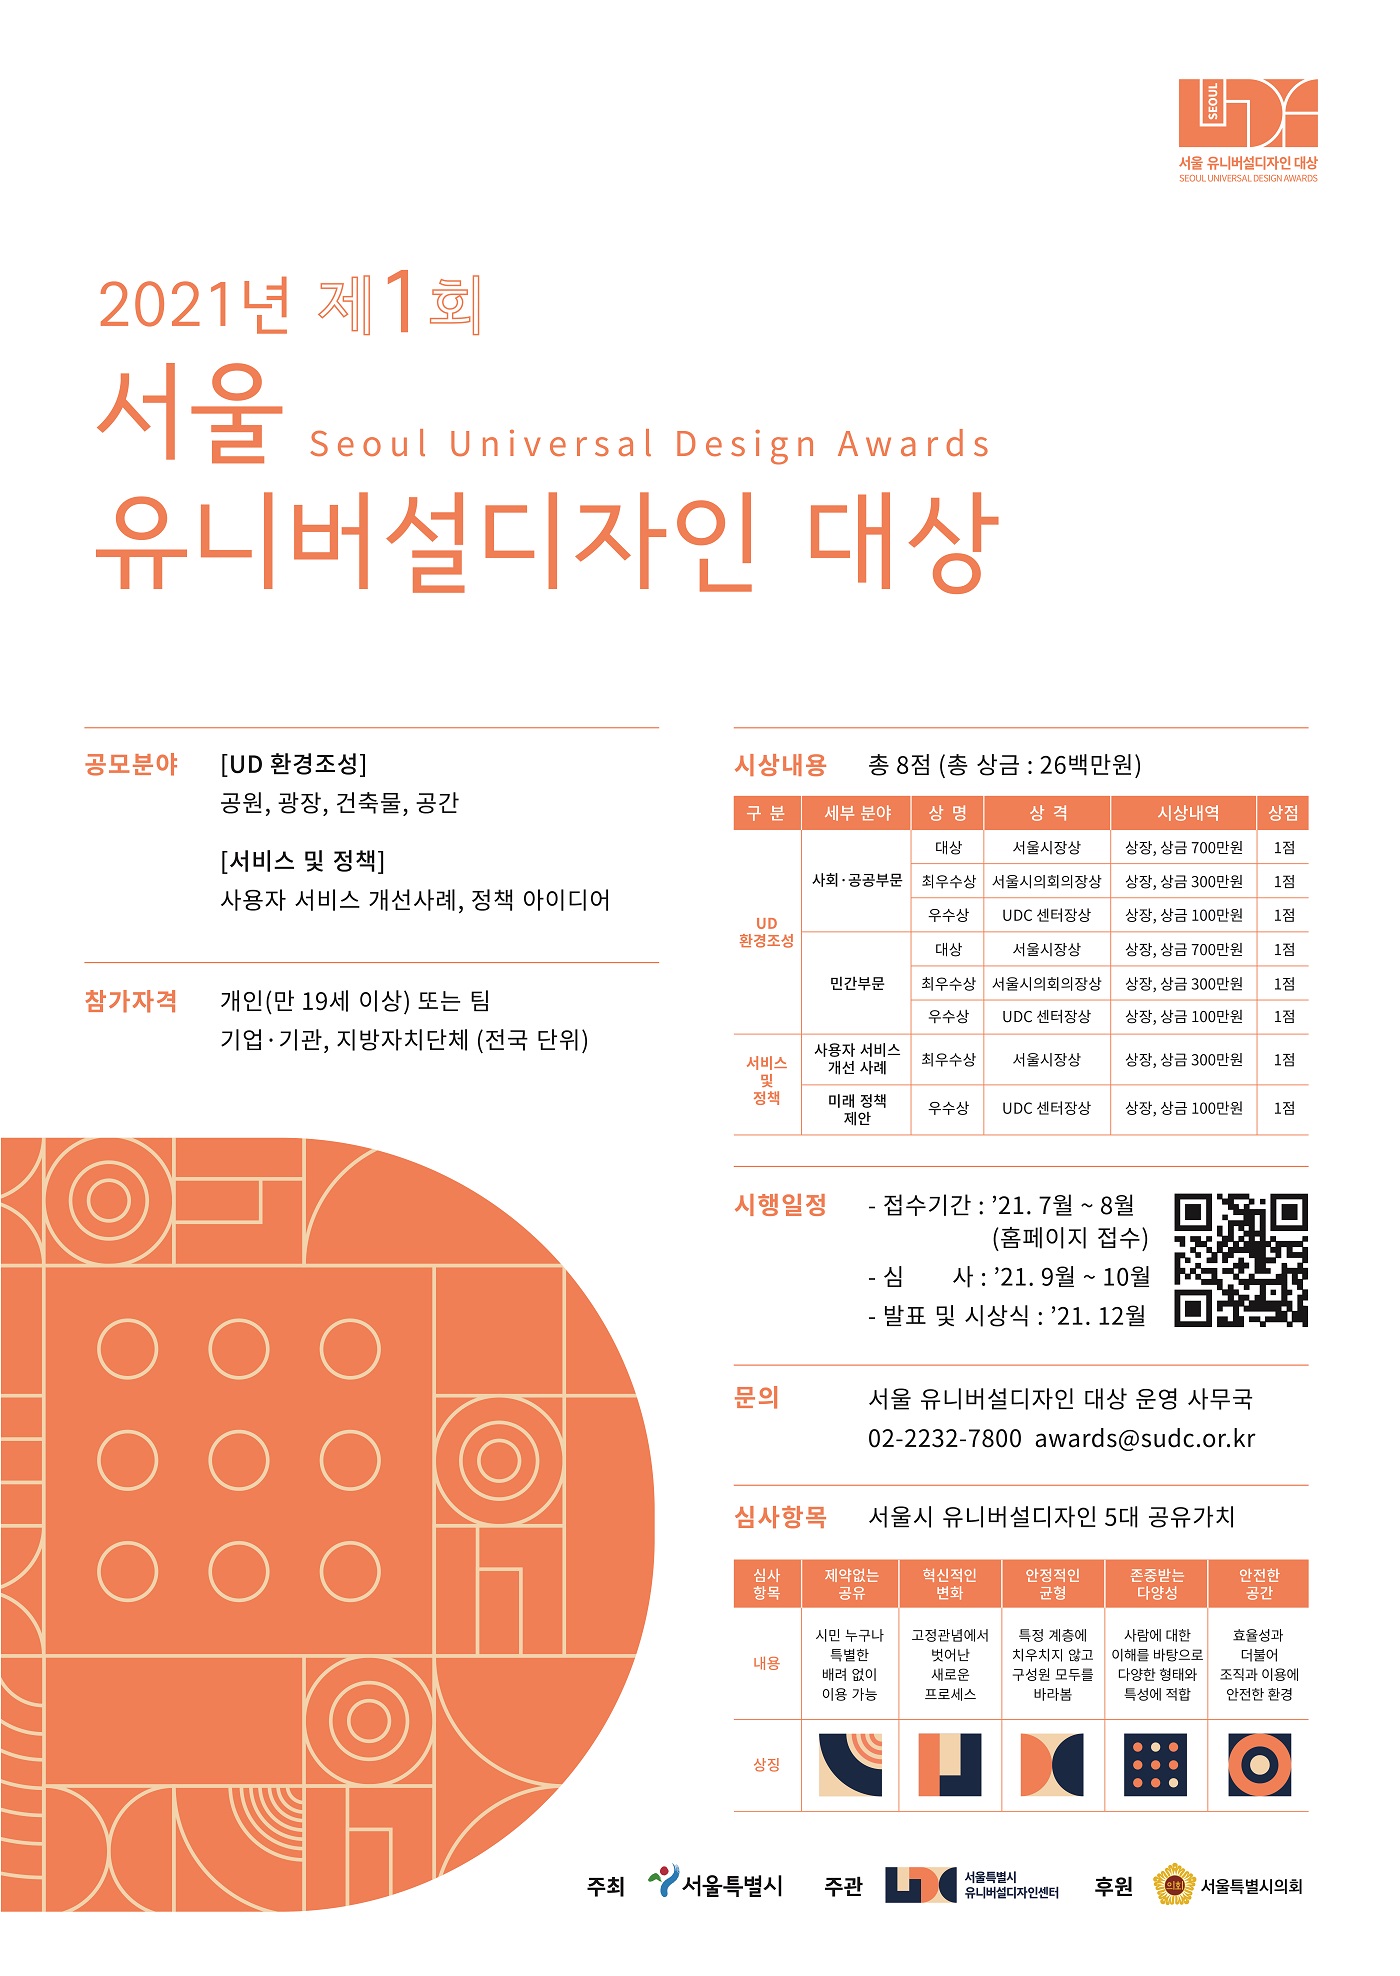  2021년 제 1회 서울 Seoul Universal Design Awards 유니버설디자인 대상 1.공모분야 [UD환경조성] - 공원, 광장, 건축물, 공간 [서비스 및 정채] - 사용자 서비스 개선사례, 정책 아이디어 2.참가자격 개인(만19세 이상)또는 팀 기업·기관, 지방자치단체(전국 단위) 3.시상내용 총 8점(총 상금 : 26백만원) 구분 : UD환경조성, 세부분야 : 사회·공공부문, 상명 : 대상, 상격 : 서울시장상, 시상내역 : 상장(상금 700만원), 상점 : 1점 구분 : UD환경조성, 세부분야 : 사회·공공부문, 상명 : 최우수상, 상격 : 서울시의회의장상, 시상내역 : 상장(상금 300만원), 상점 : 1점 구분 : UD환경조성, 세부분야 : 사회·공공부문, 상명 : 우수상, 상격 : UDC 센터장상, 시상내역 : 상장(상금 100만원), 상점 : 1점 구분 : UD환경조성, 세부분야 : 민간부문, 상명 : 대상, 상격 : 서울시장상, 시상내역 : 상장(상금 700만원), 상점 : 1점 구분 : UD환경조성, 세부분야 : 민간부문, 상명 : 최우수상, 상격 : 서울시의회의장상, 시상내역 : 상장(상금 300만원), 상점 : 1점 구분 : UD환경조성, 세부분야 : 민간부문, 상명 : 우수상, 상격 : UDC 센터장상, 시상내역 : 상장(상금 100만원), 상점 : 1점 구분 : 서비스 및 정책, 세부분야 : 사용자 서비스 개선 사례, 상명 : 최우수상, 상격 : 서울시장상, 시상내역 : 상장(상금 300만원), 상점 : 1점 구분 : 서비스 및 정책, 세부분야 : 미래 정책 제안, 상명 : 우수상, 상격 : UDC 센터장상, 시상내역 : 상장(상금 100만원), 상점 : 1점 4.시행일정 - 접수기간 : 21.7월 ~ 8월(홈페이지 접수) - 심사 : 21.9월 ~ 10월 - 발표 및 시상식 : 21.12월 5.문의 서울 유니버설 디자인 대상 운영 사무국 02-2232-7800 awards@sudc.or.kr 6.심사항목 서울시 유니버설 디자인 5대 공유가치 심사항목 : 내용, 제약없는 공유 : 시민 누구나 특별한 배려없이 이용가능, 혁신적인 변화 : 고정관념에서 벗어난 새로운 프로세스, 안정적인 균형 : 특정 계층에 치우치지 않고 구성원 모두를 바라봄, 존중받는 다양성 : 사람에 대한 이해를 바탕으로 다양한 형태와 특성에 적합, 안전한 공간 : 효율성과 더불어 조직과 이용에 안전한 환경 심사항목 : 상징, 제약없는공유 : 이미지1, 혁신적인 변화 : 이미지2, 안정적인 균형 : 이미지3, 존중받는 다양성 : 이미지4, 안전한 공간 : 이미지5 주최 - 서울특별시 주관 - 서울특별시 유니버설디자인센터 후원 - 서울특별시의회 